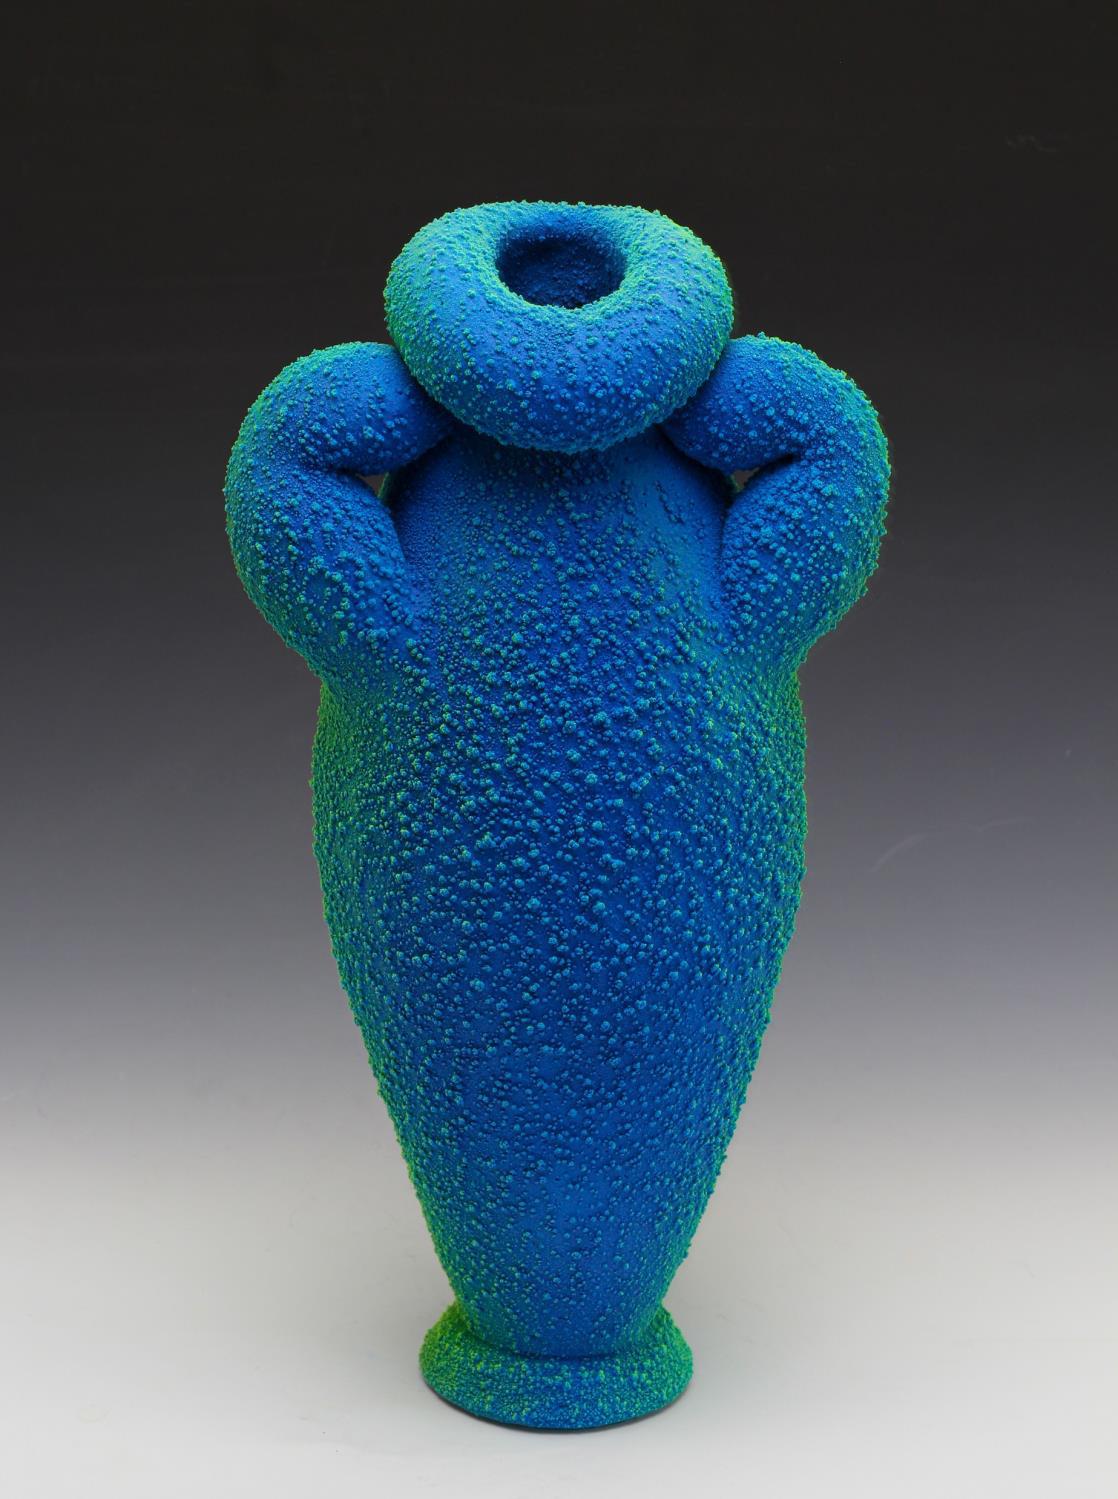 Maxwell Mustardo Abstract Sculpture - "Blue & Green Amphora 2", Ceramic, Sculpture, Mixed Media, Stoneware, Plastic 